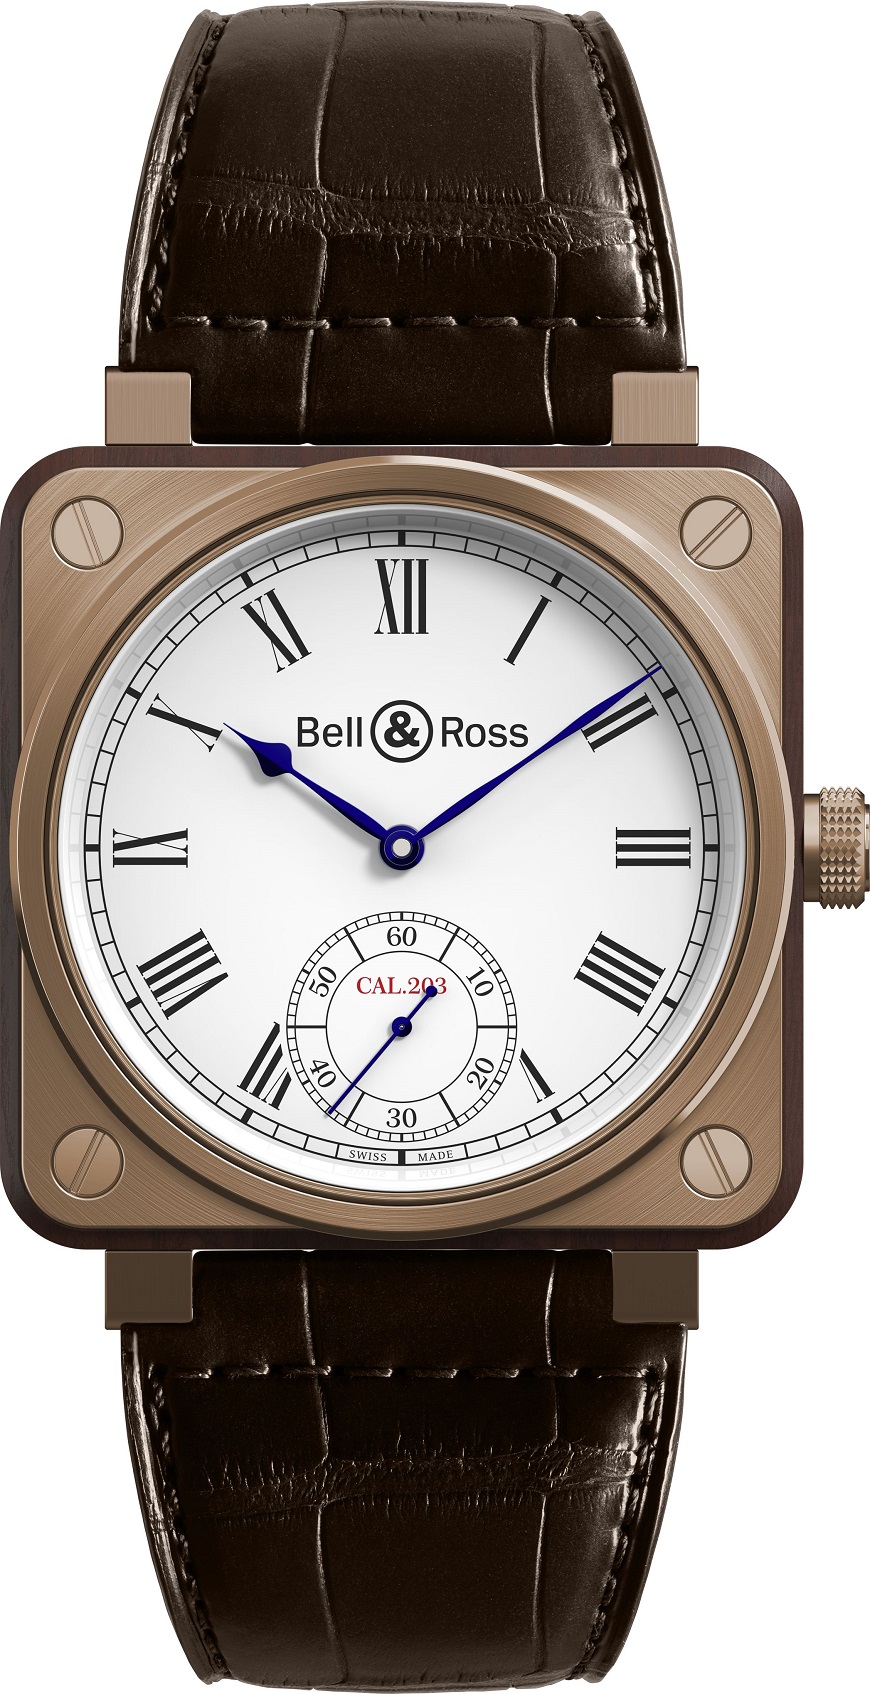 Bell & Ross BR 01 Marine